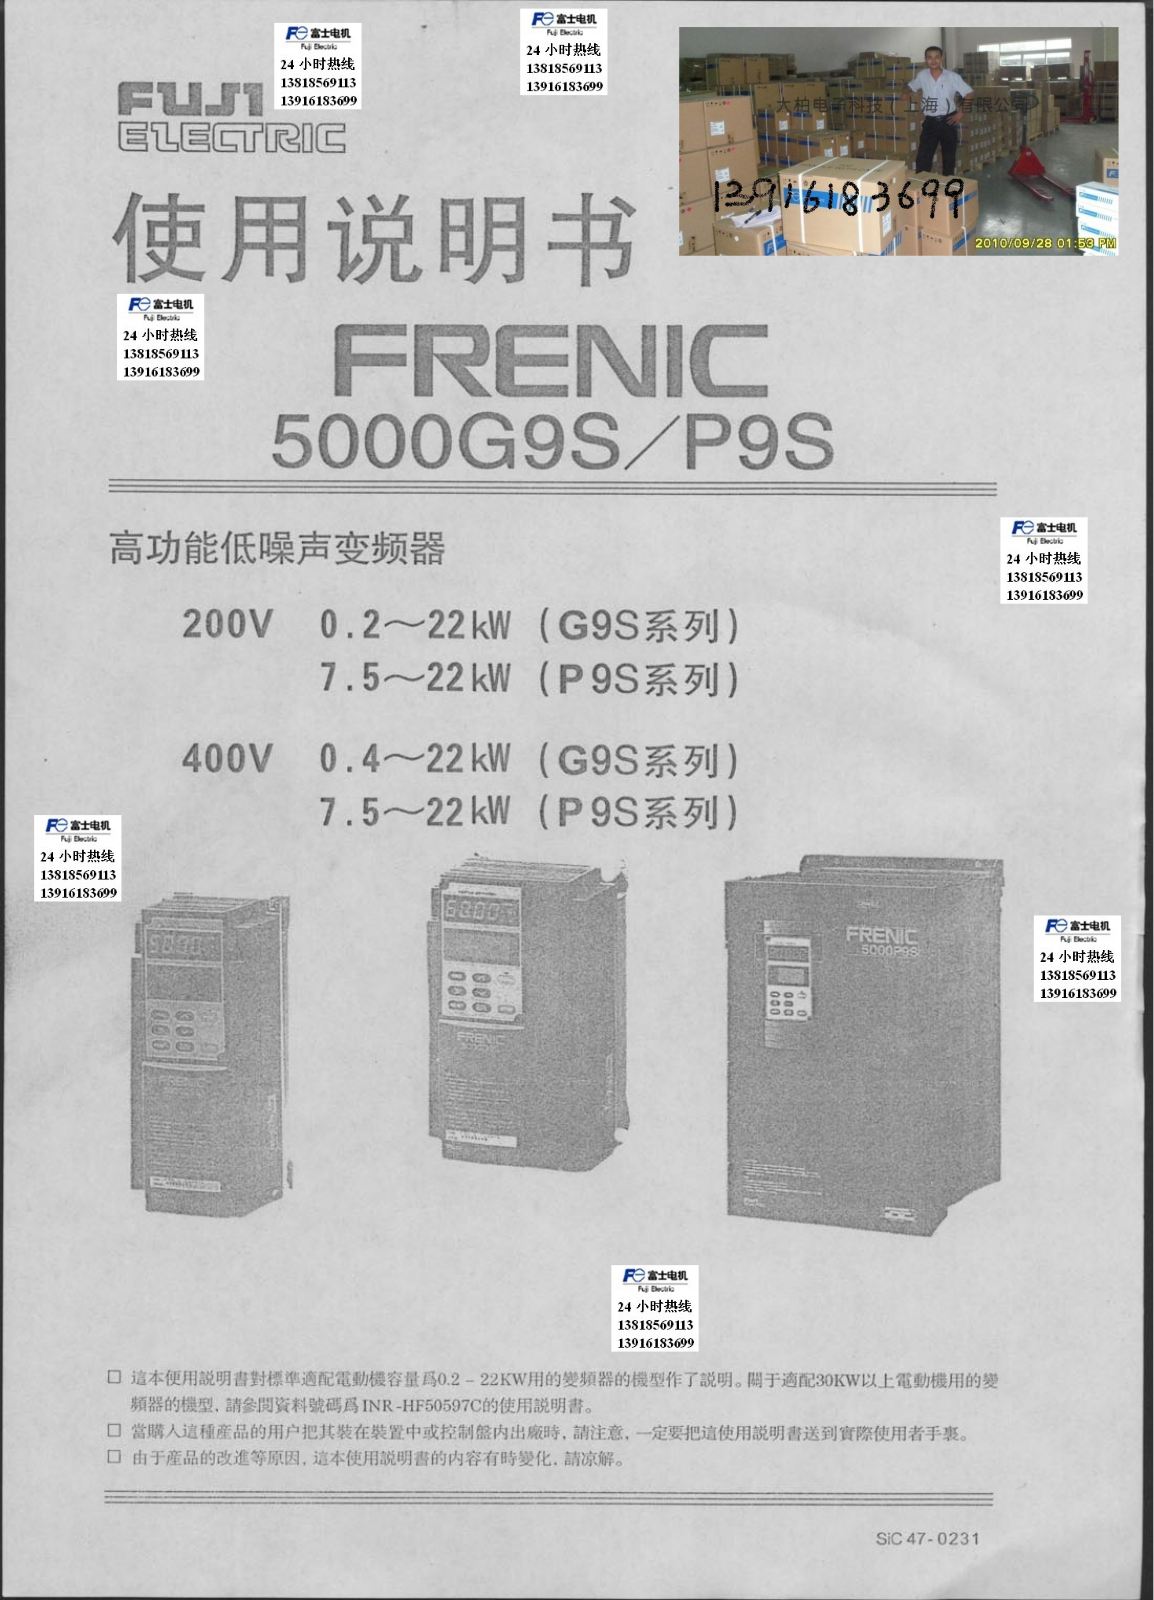 Fuji Electric FRENIC 5000G9S Service Manual